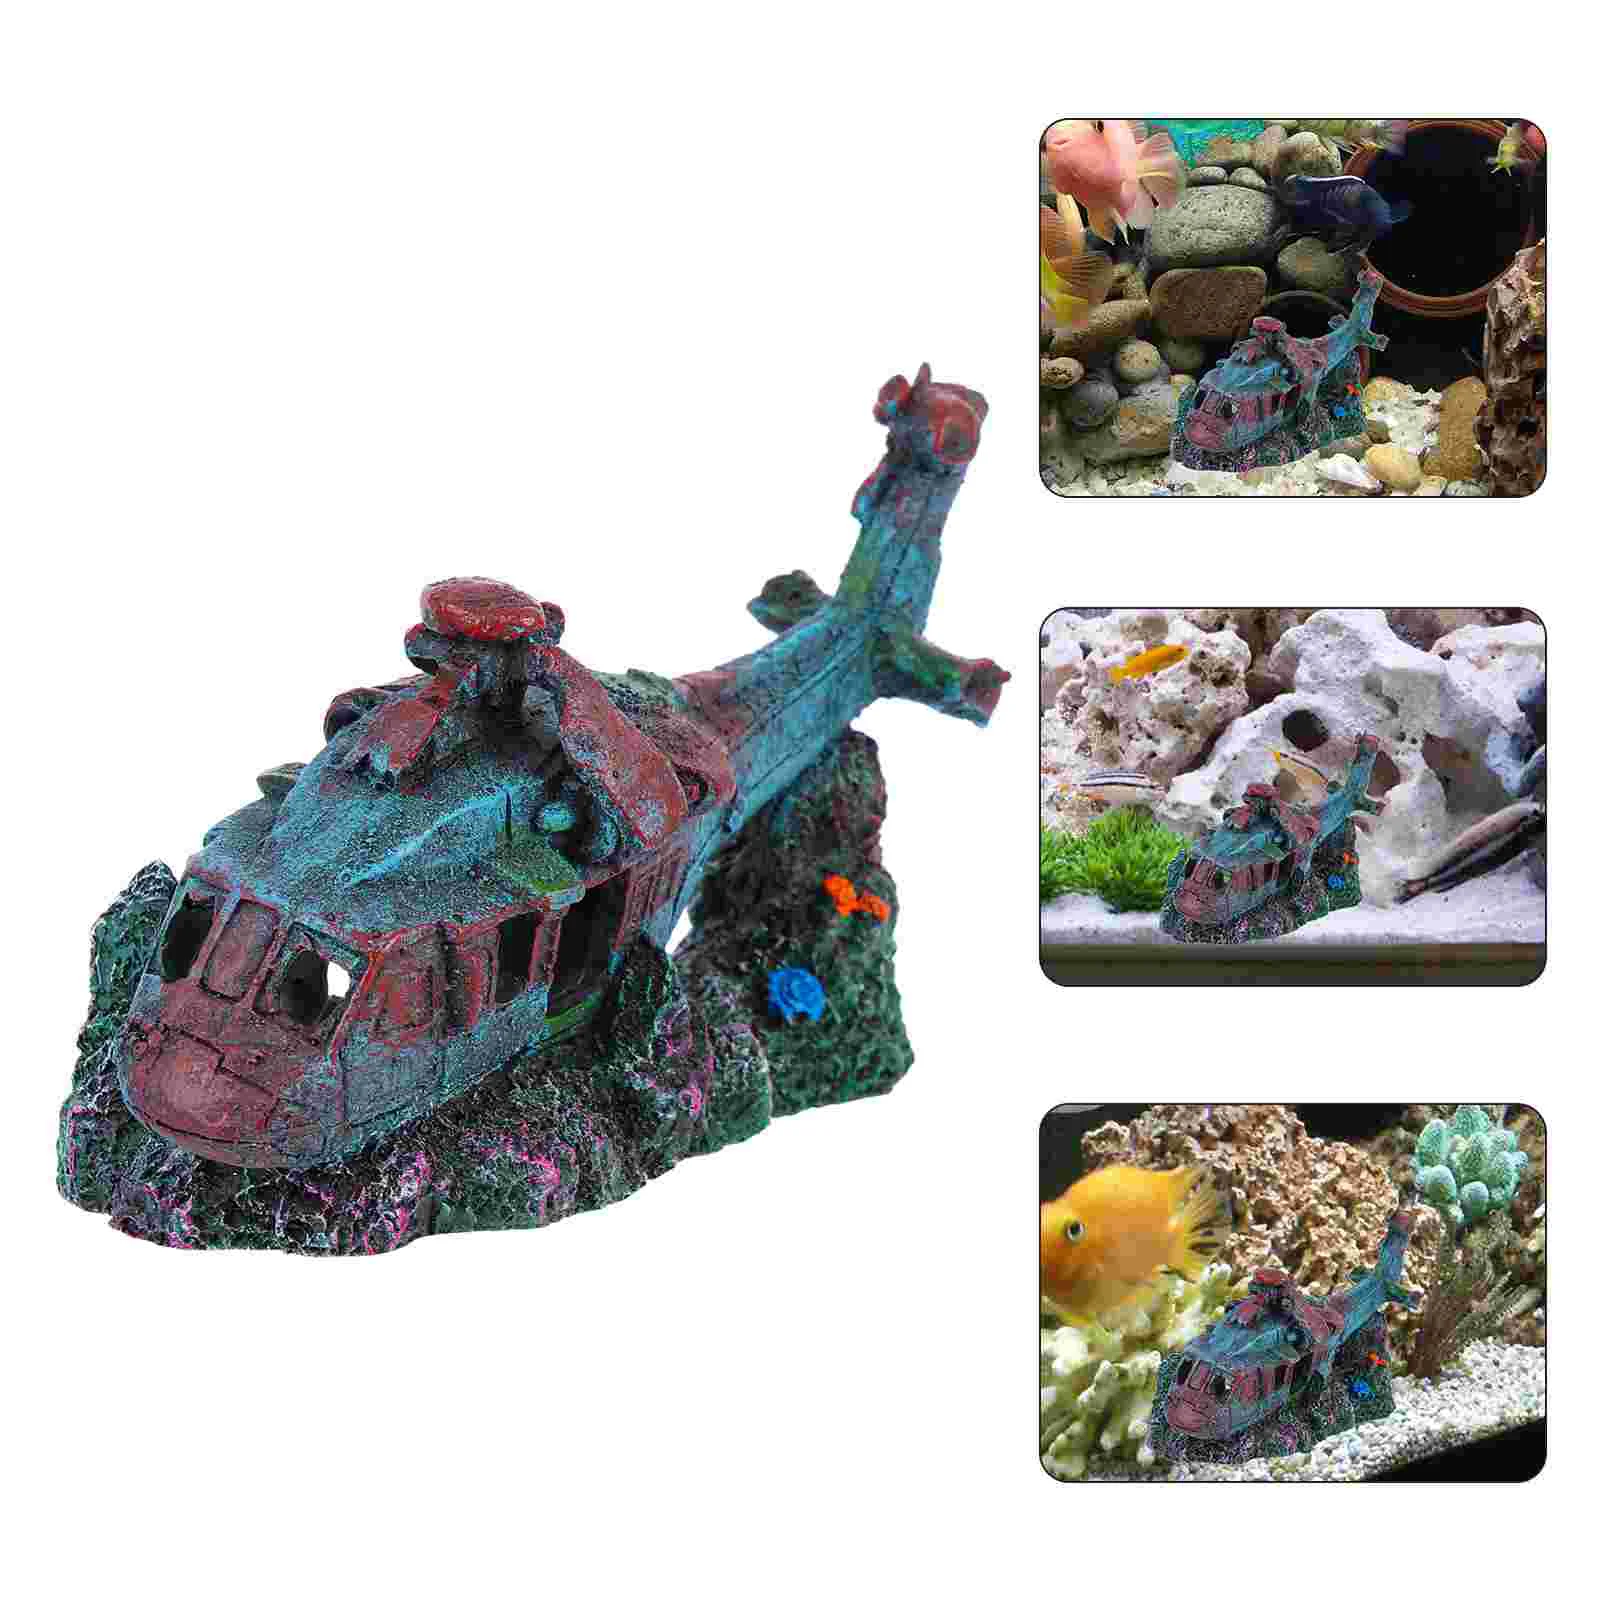 

Fish Tank Landscaping Decoration Decorations Aquarium Aircraft Wreckage Figurine Supply Fighter Resin Adorn Accessory Landscape